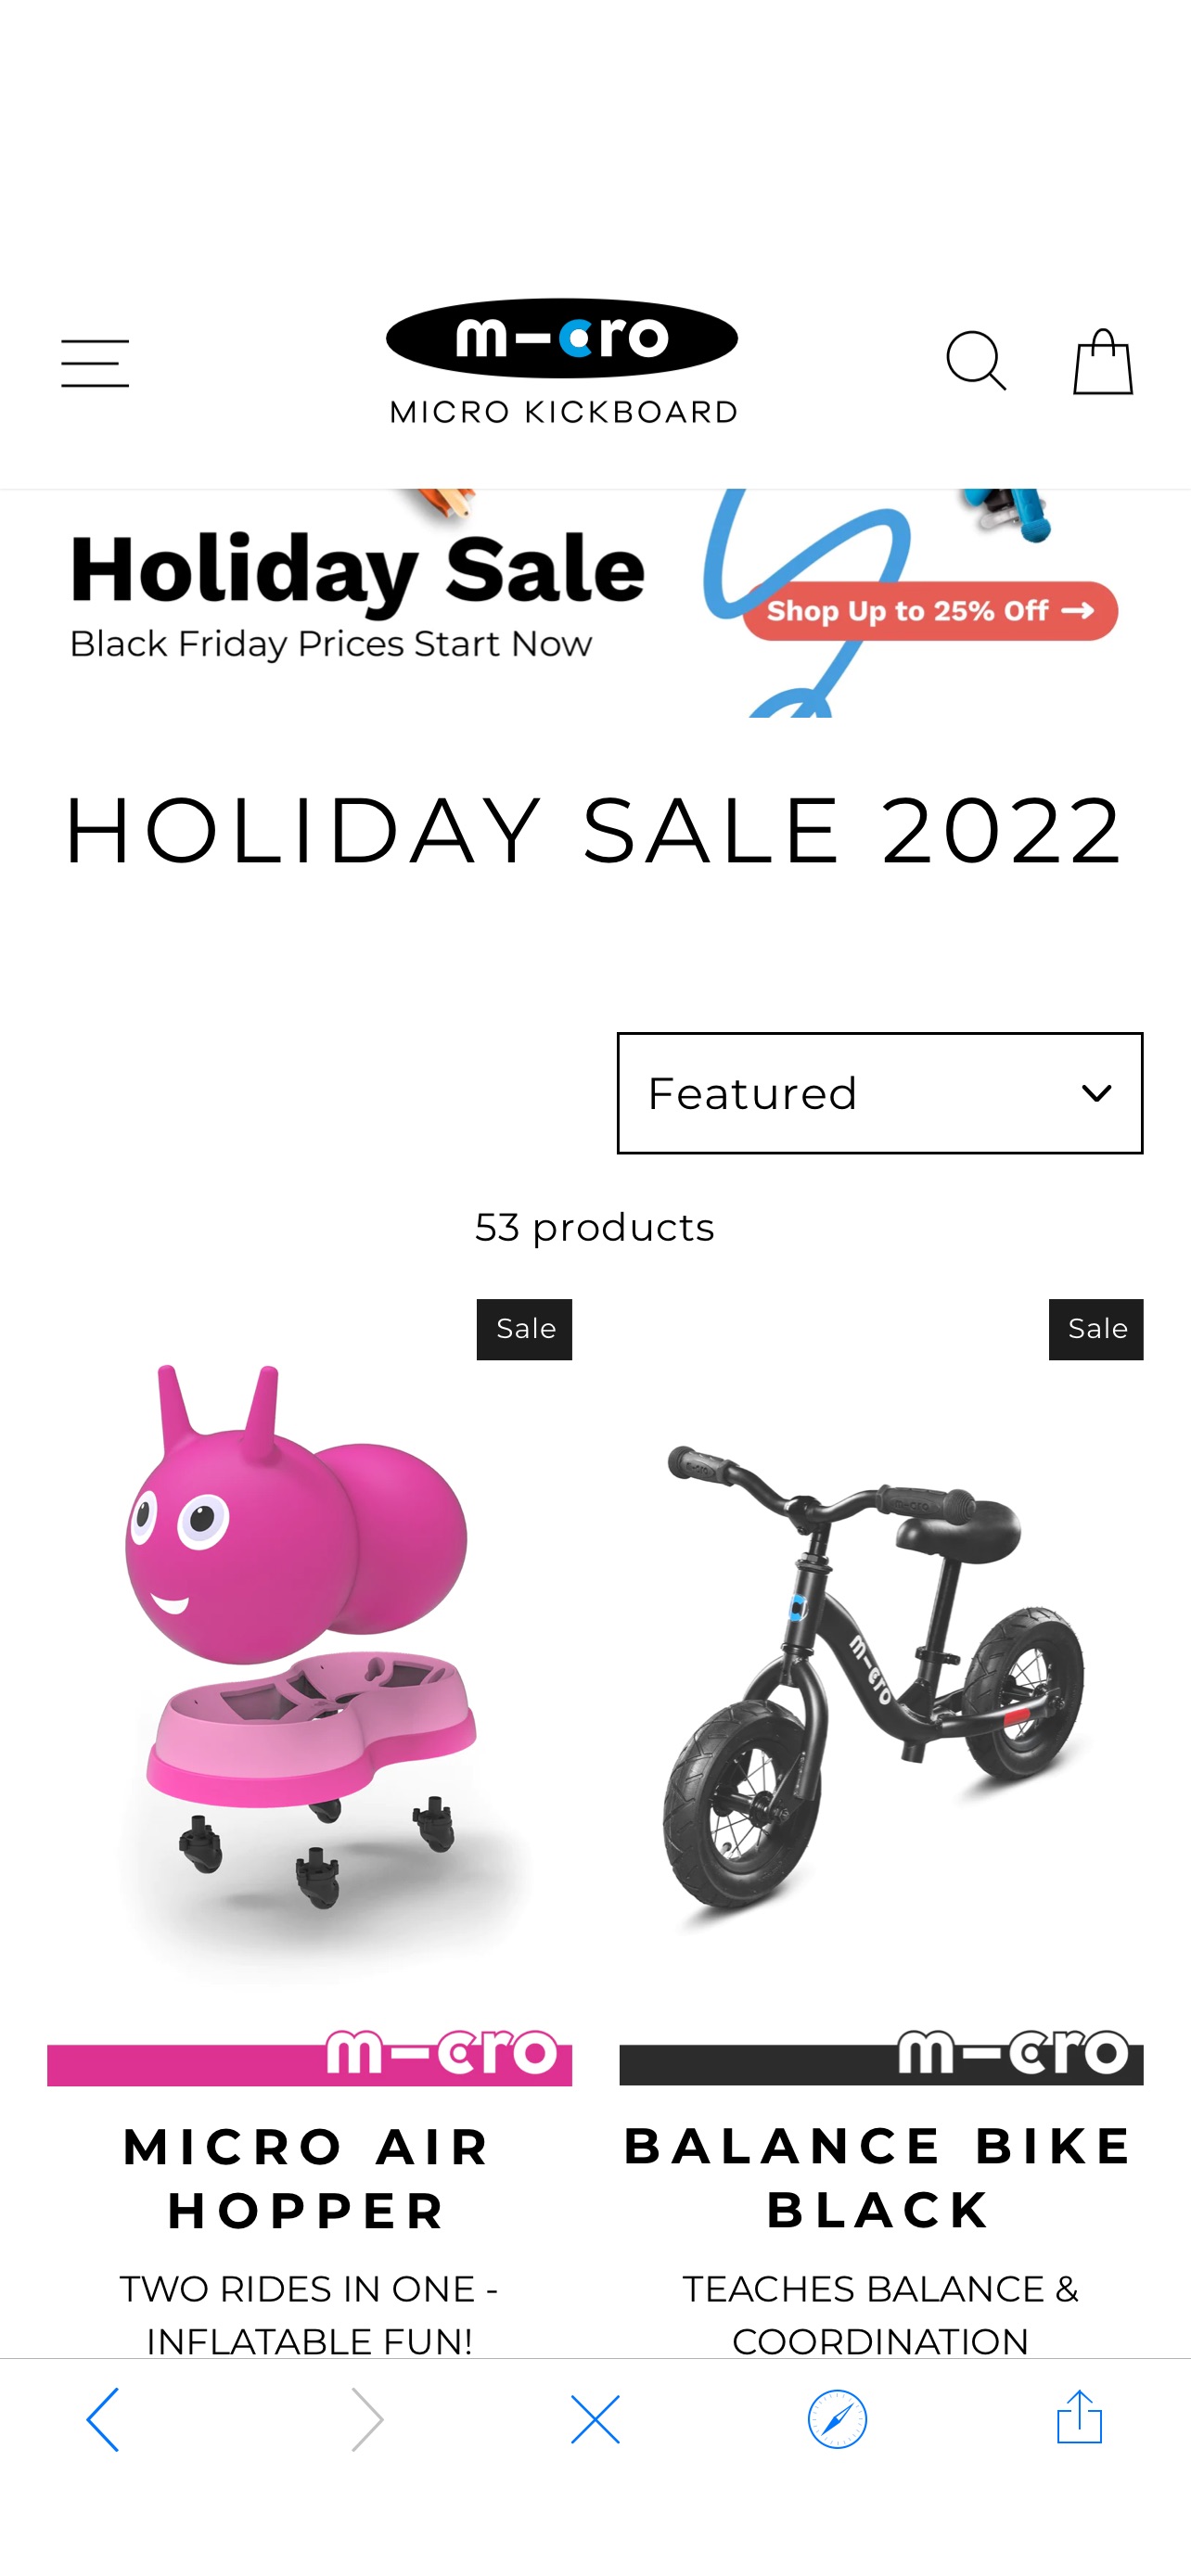 Holiday Sale 2022 – Micro Kickboard